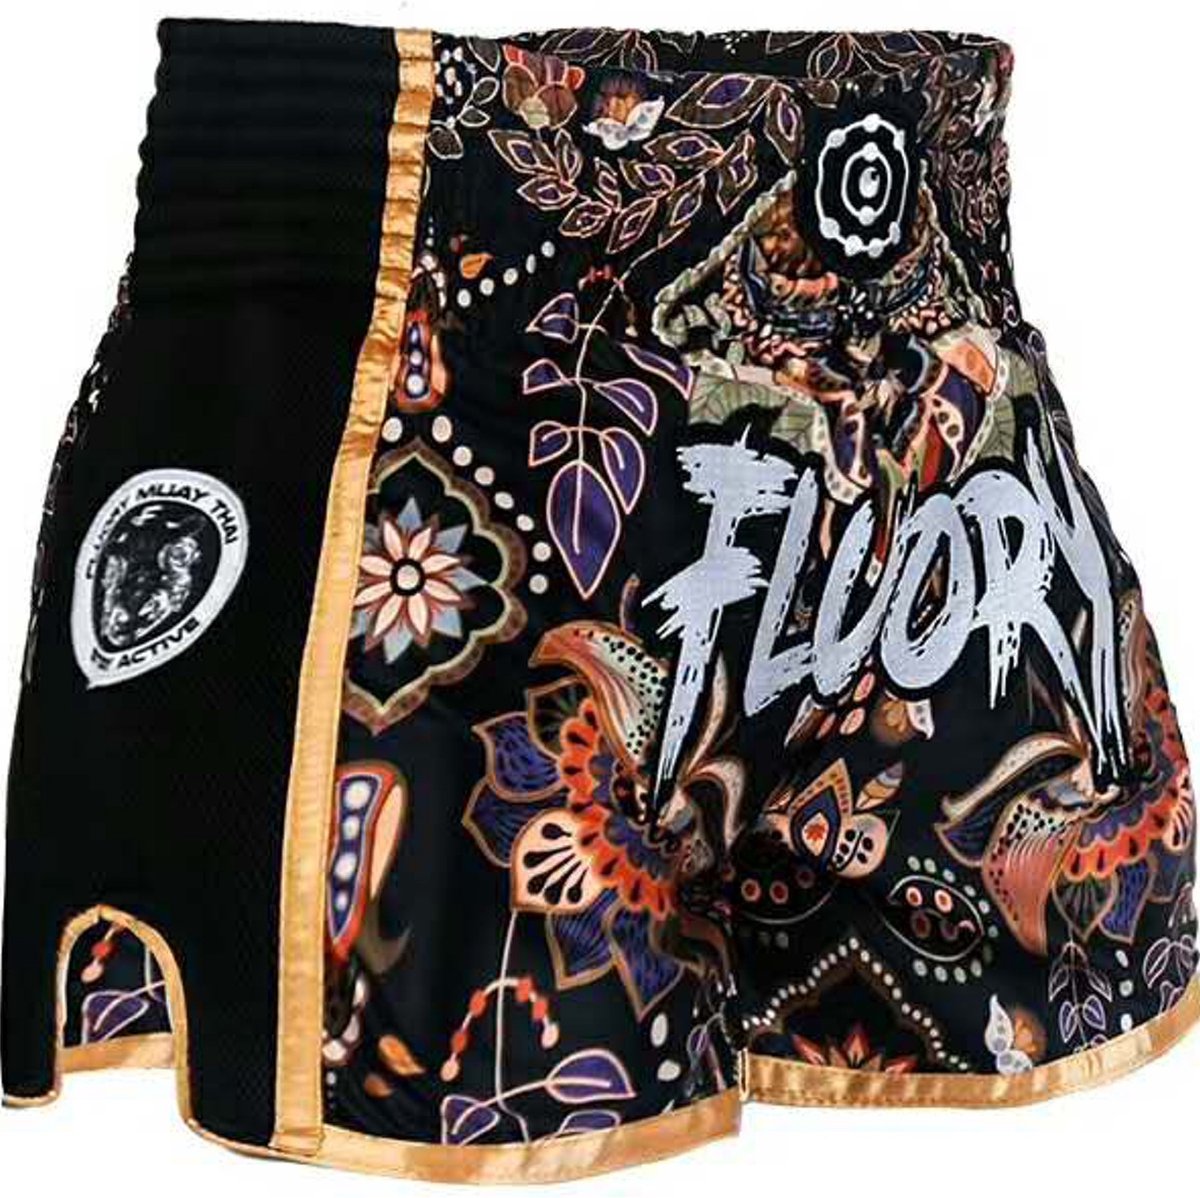 Fluory Muay Thai Short Kickboks Broek Flowers maat XL - Fluory